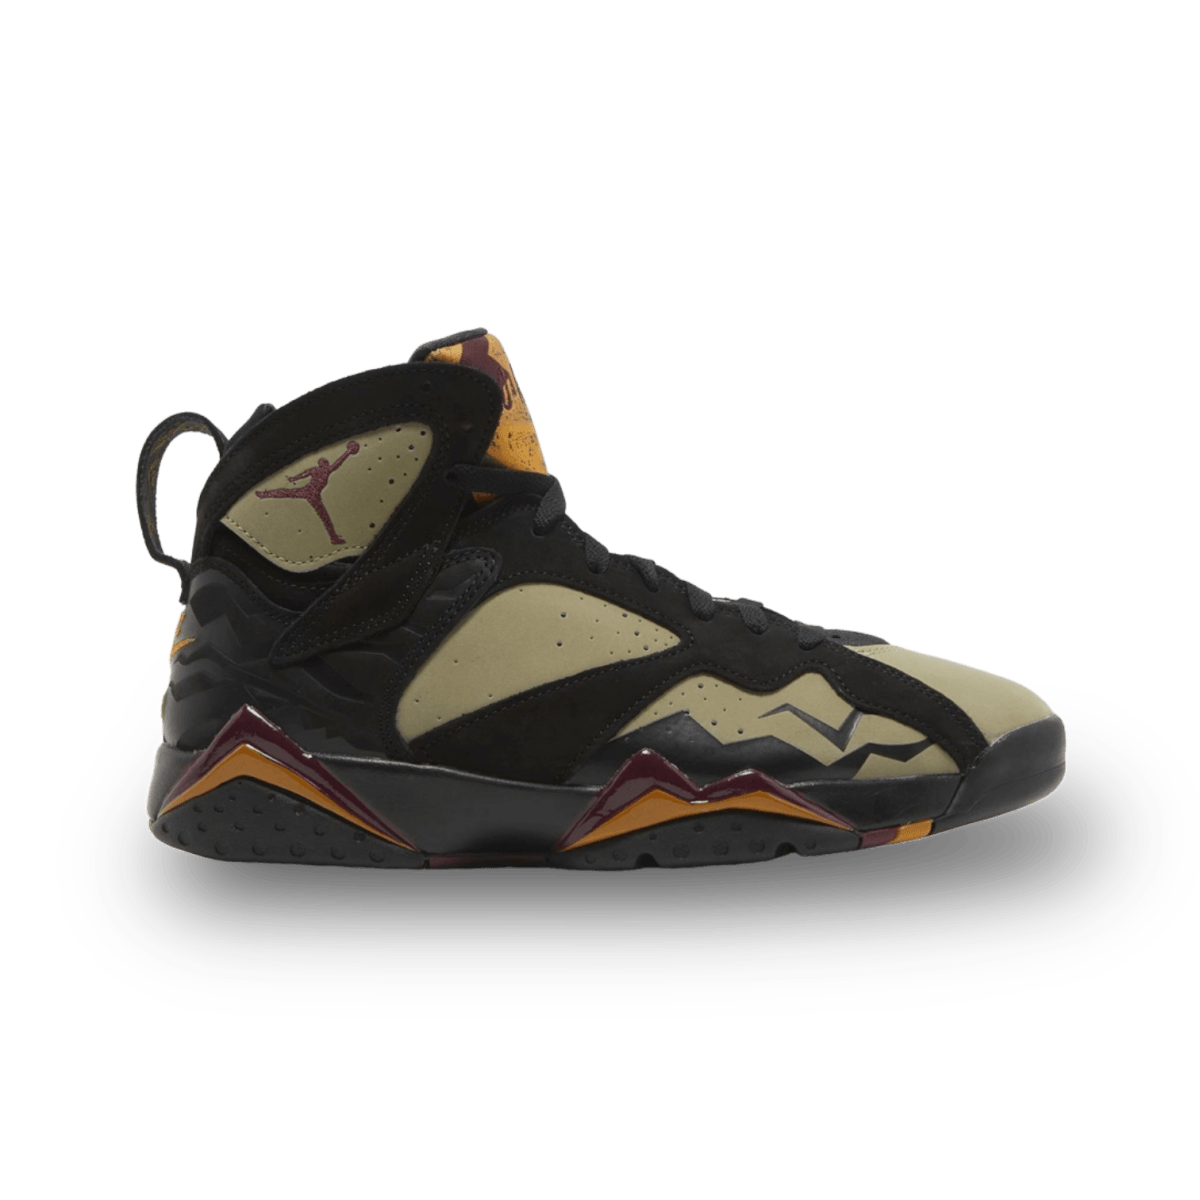 Air Jordan 7 Retro Black Olive - Mid Sneaker - Jordan - Jawns on Fire